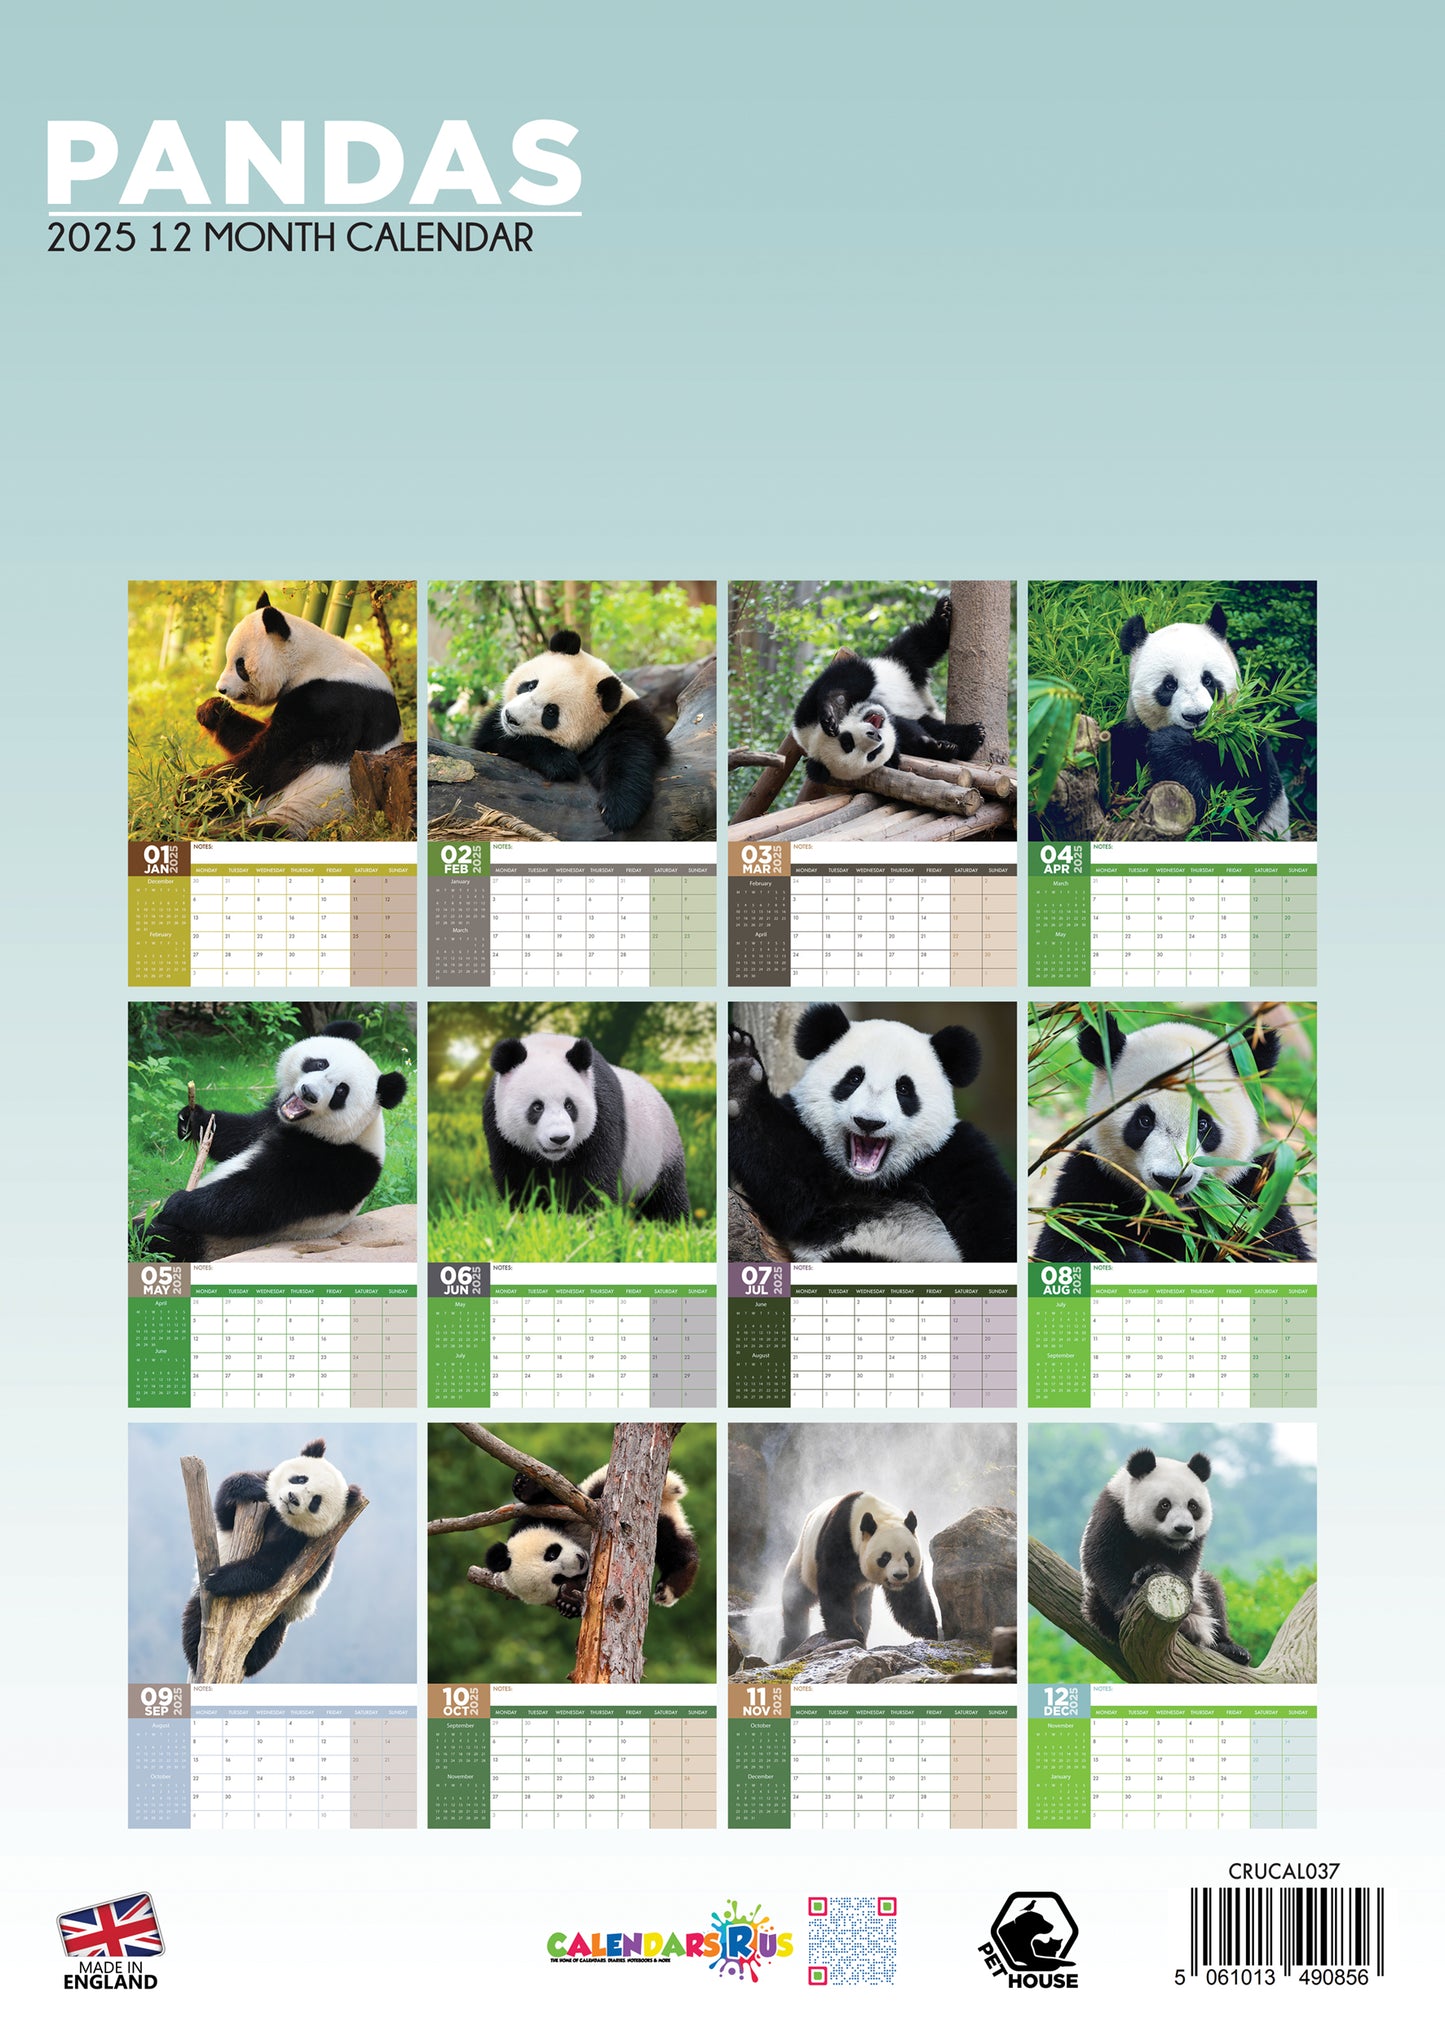 Pandas Calendar 2025